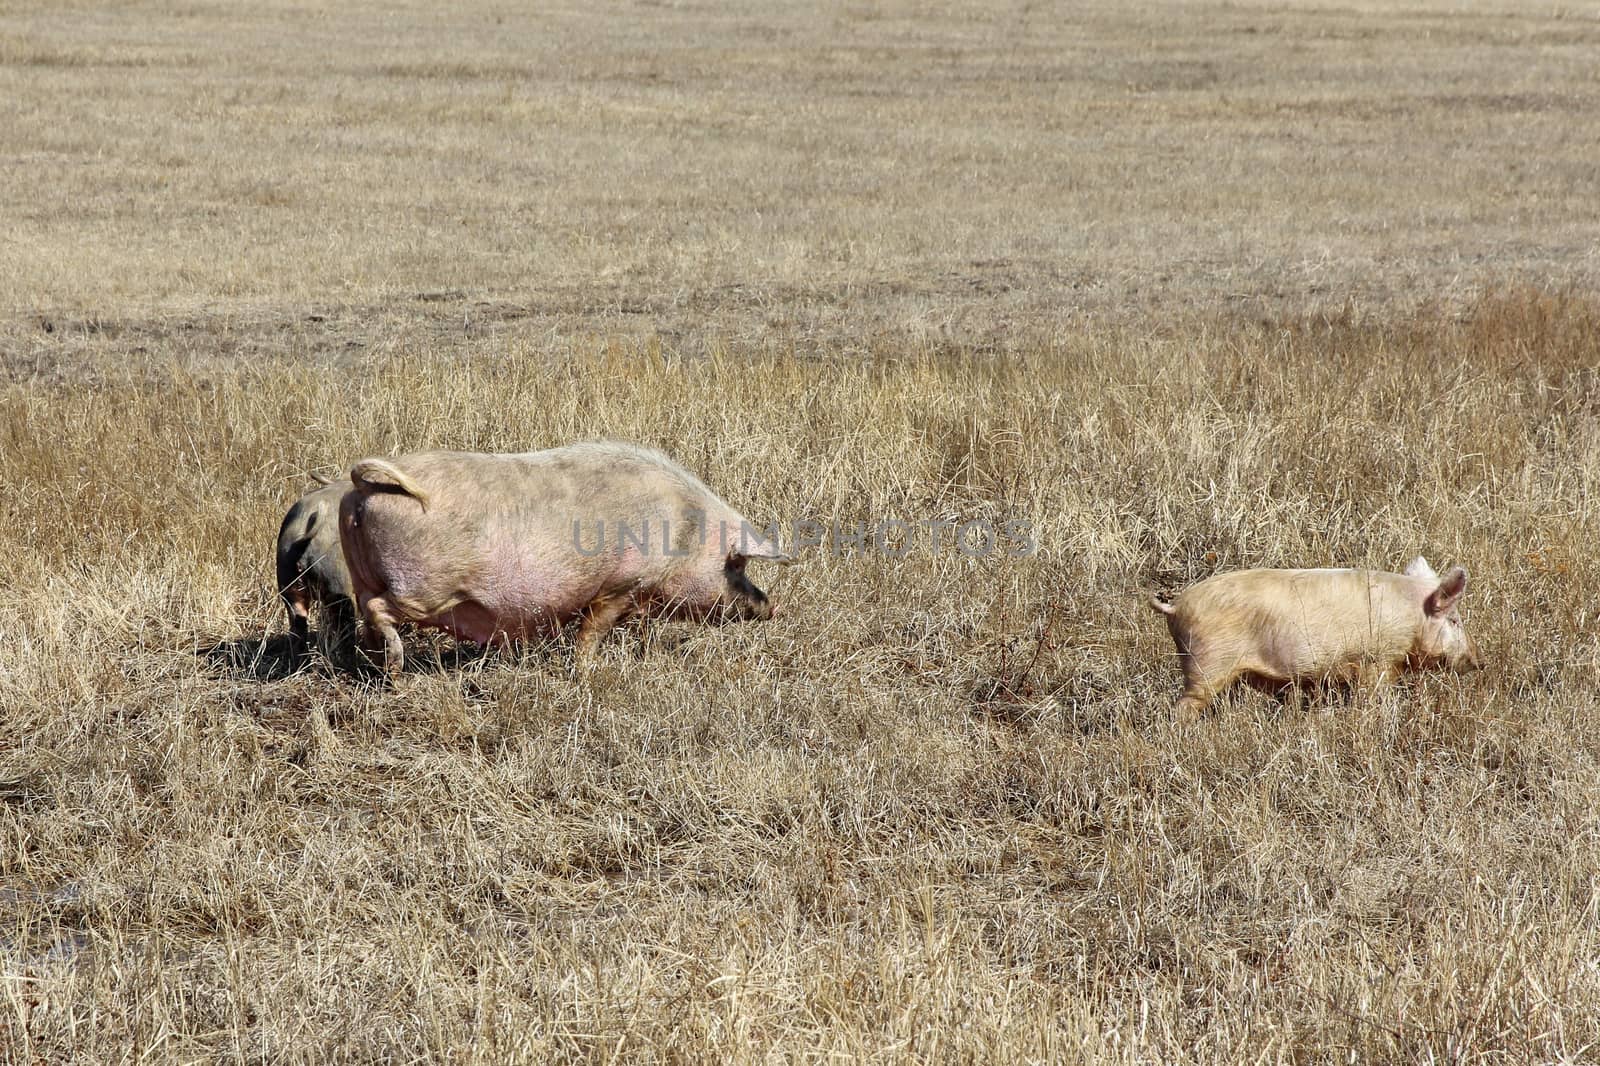 Three pigs grazing on the dry grass.